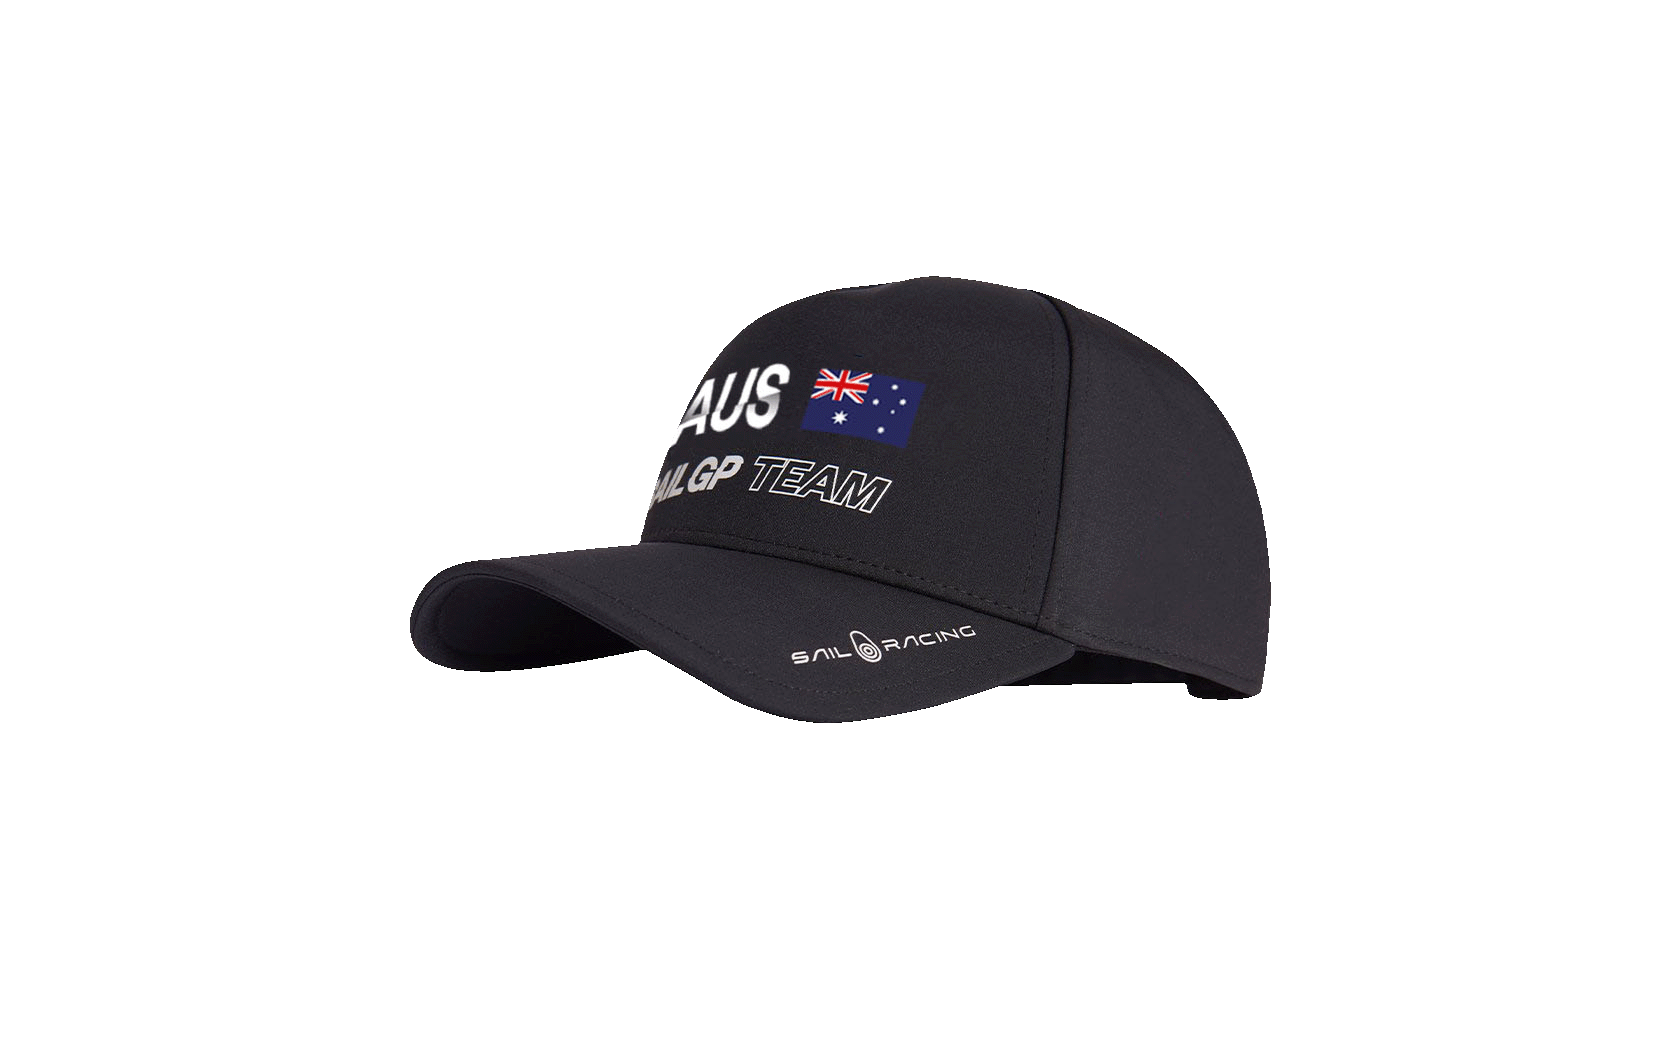 Load image into Gallery viewer, AUSTRALIA SAILGP CAP